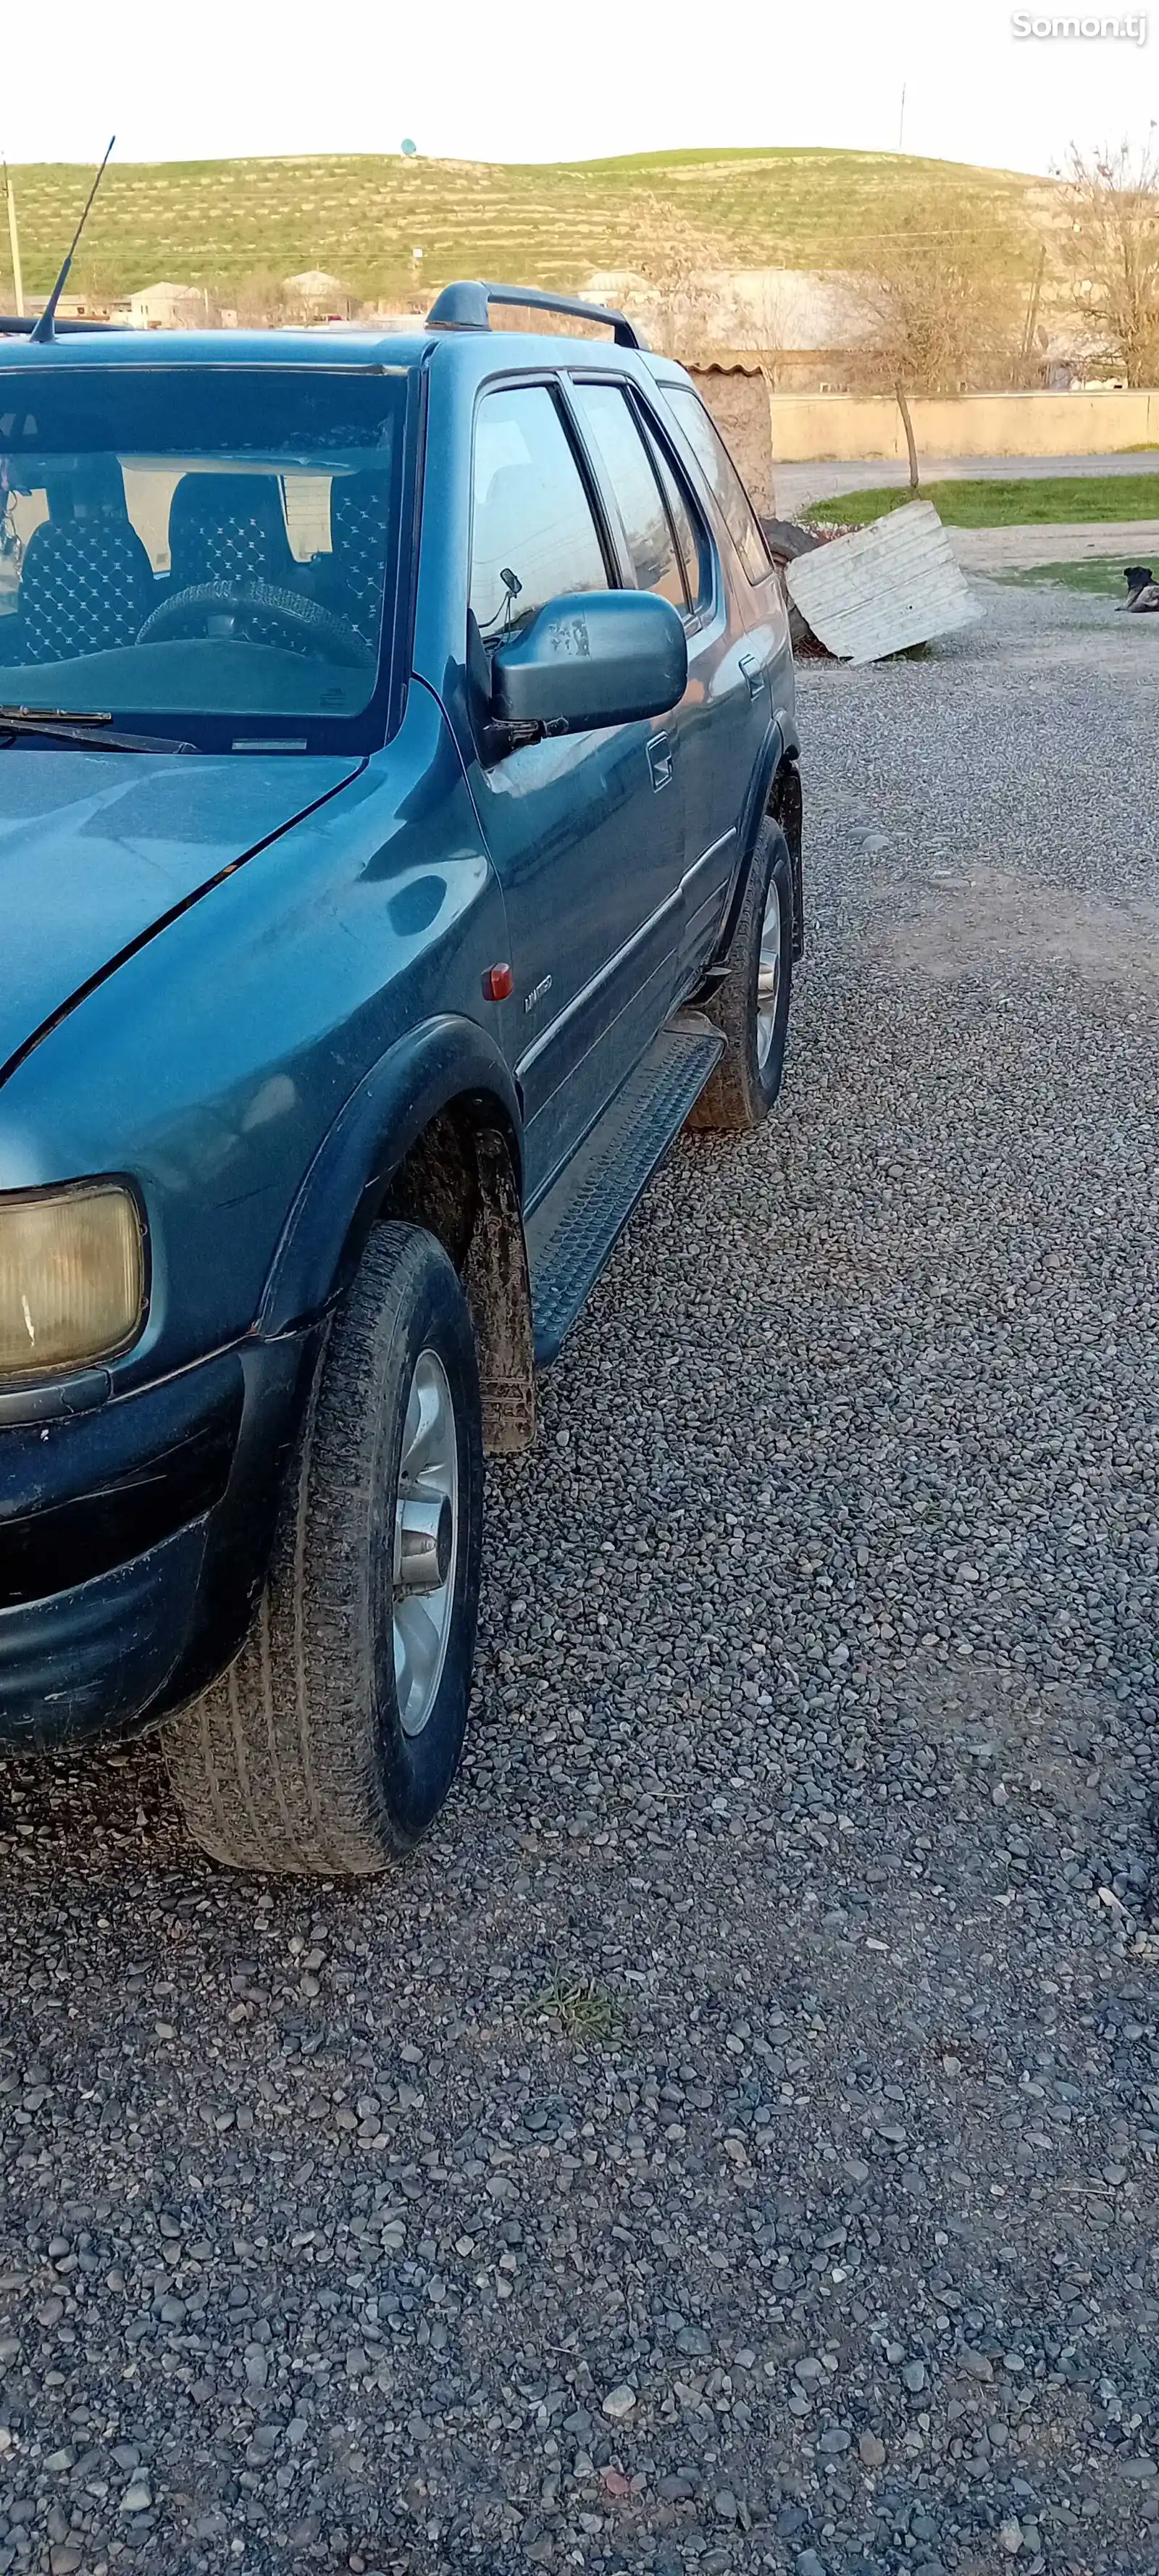 Opel Frontera, 1999-2